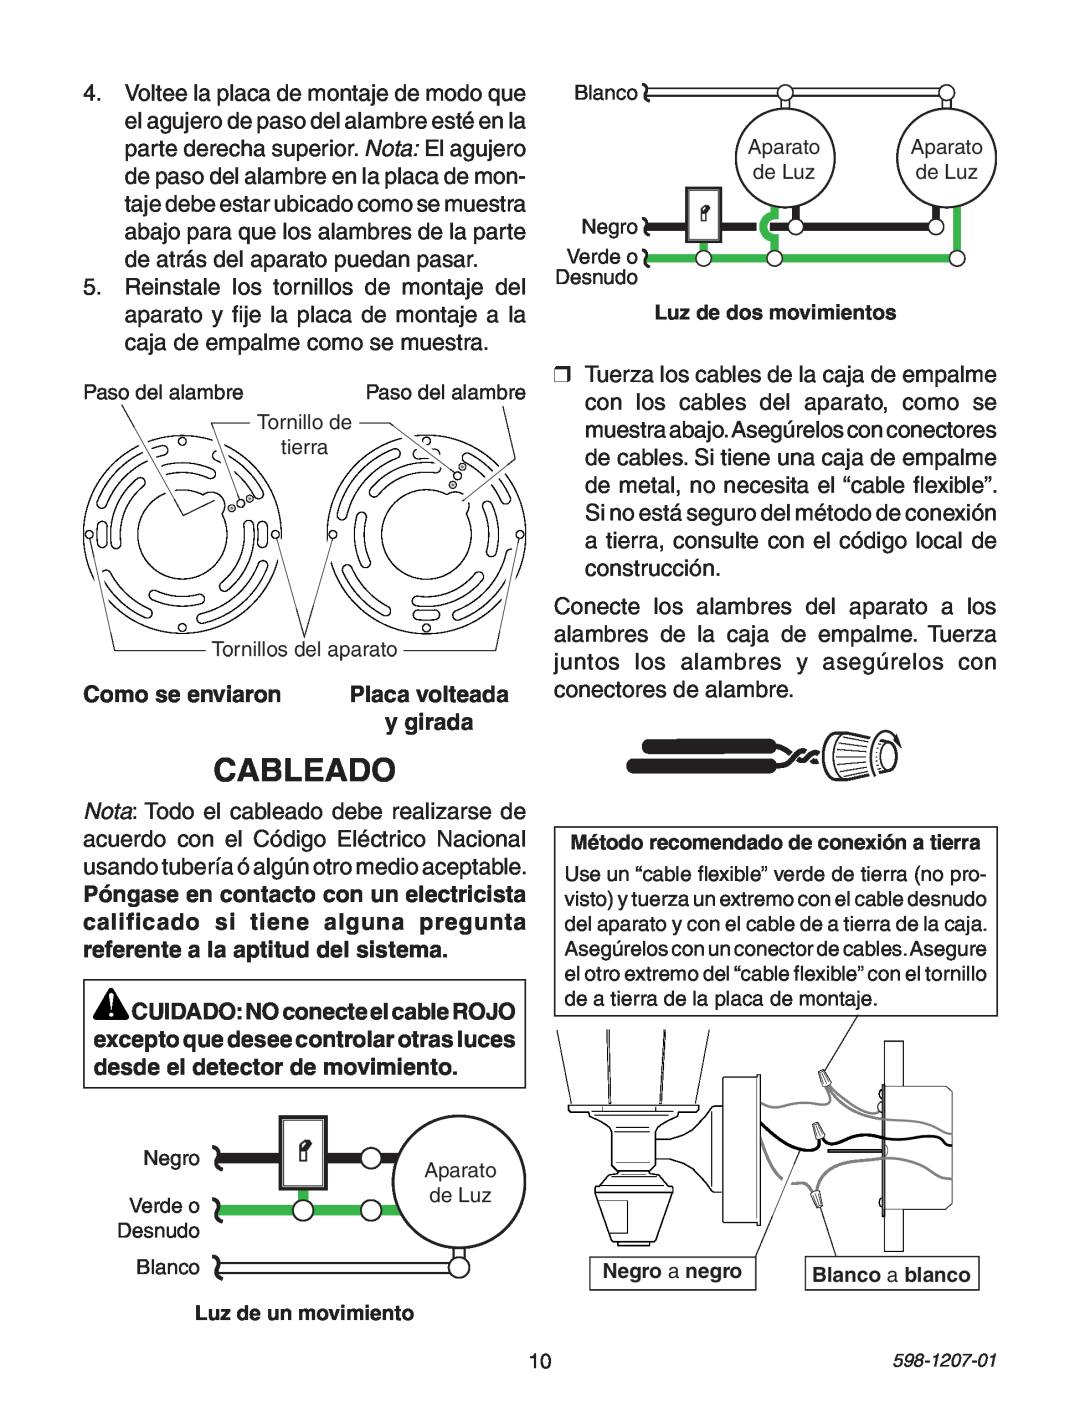 Heath Zenith Motion Sensing Coach Lights manual Cableado, Como se enviaron, y girada 